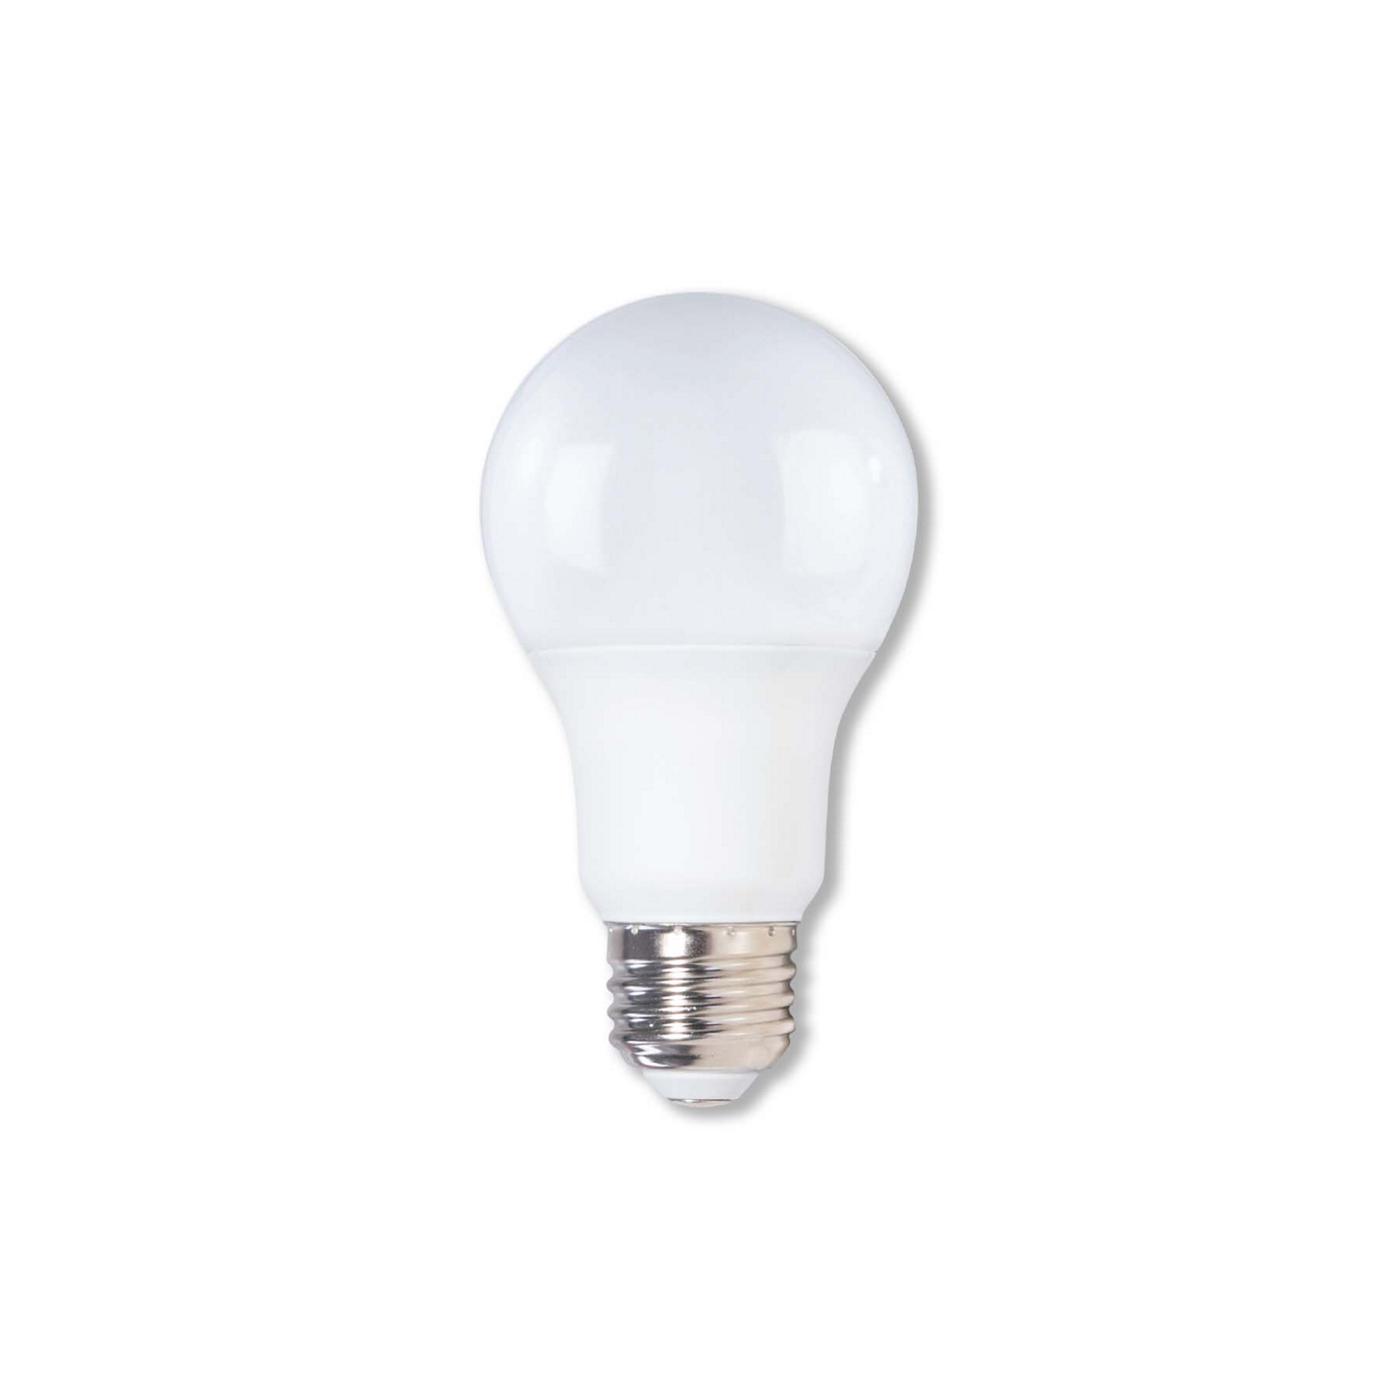 H-E-B A19 60-Watt LED Light Bulbs - Bright White; image 2 of 2